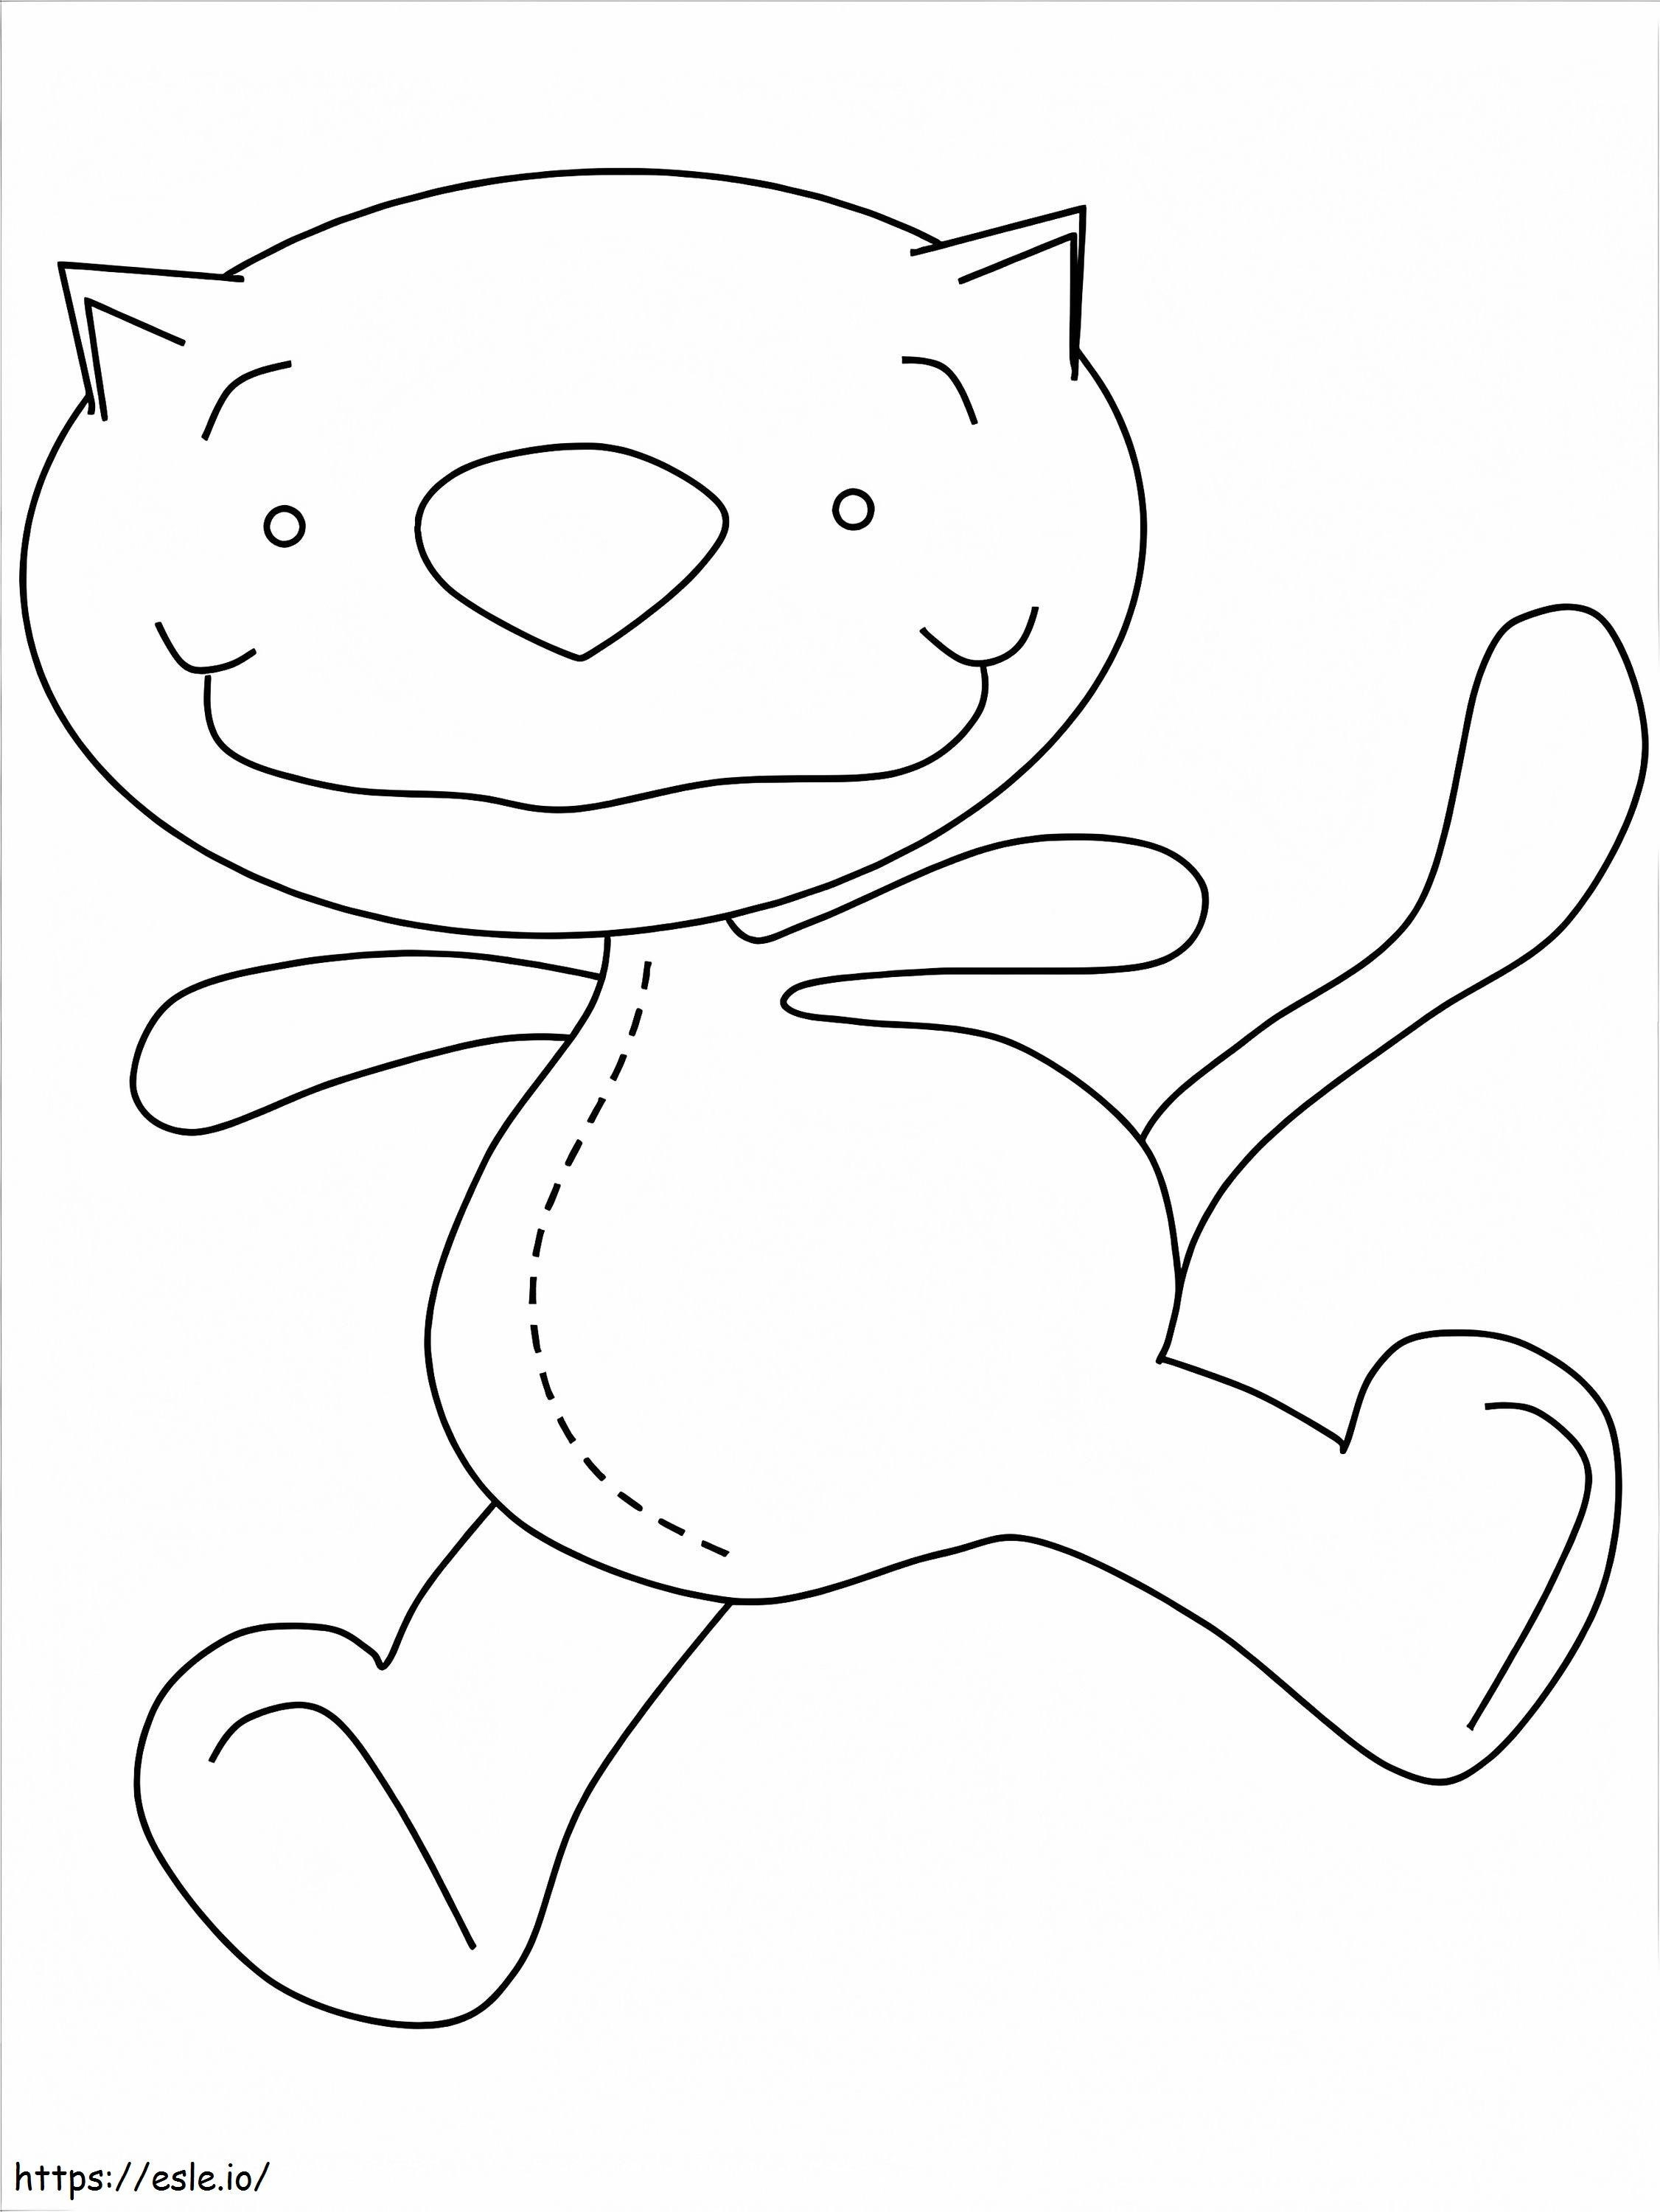 Cute Binoo coloring page